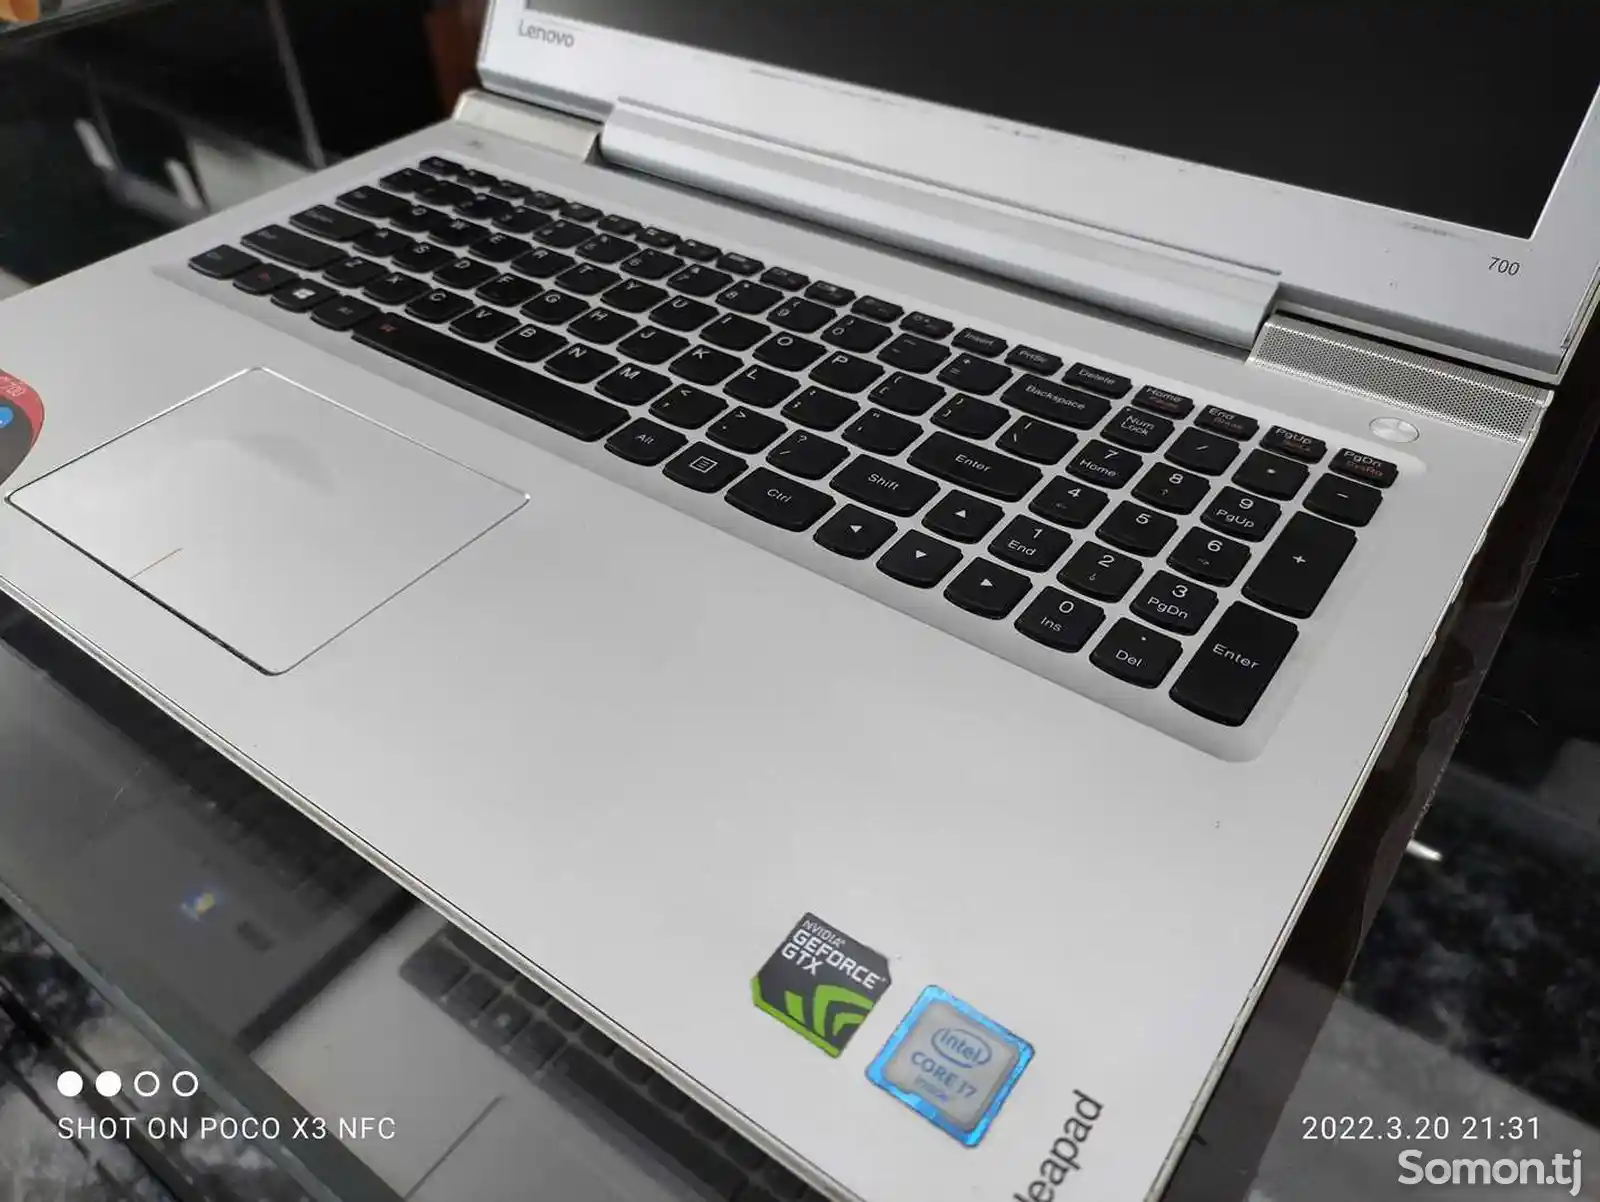 Игровой Ноутбук Lenovo Ideapad 700 Core i7-6700HQ GTX 950M 2GB-5